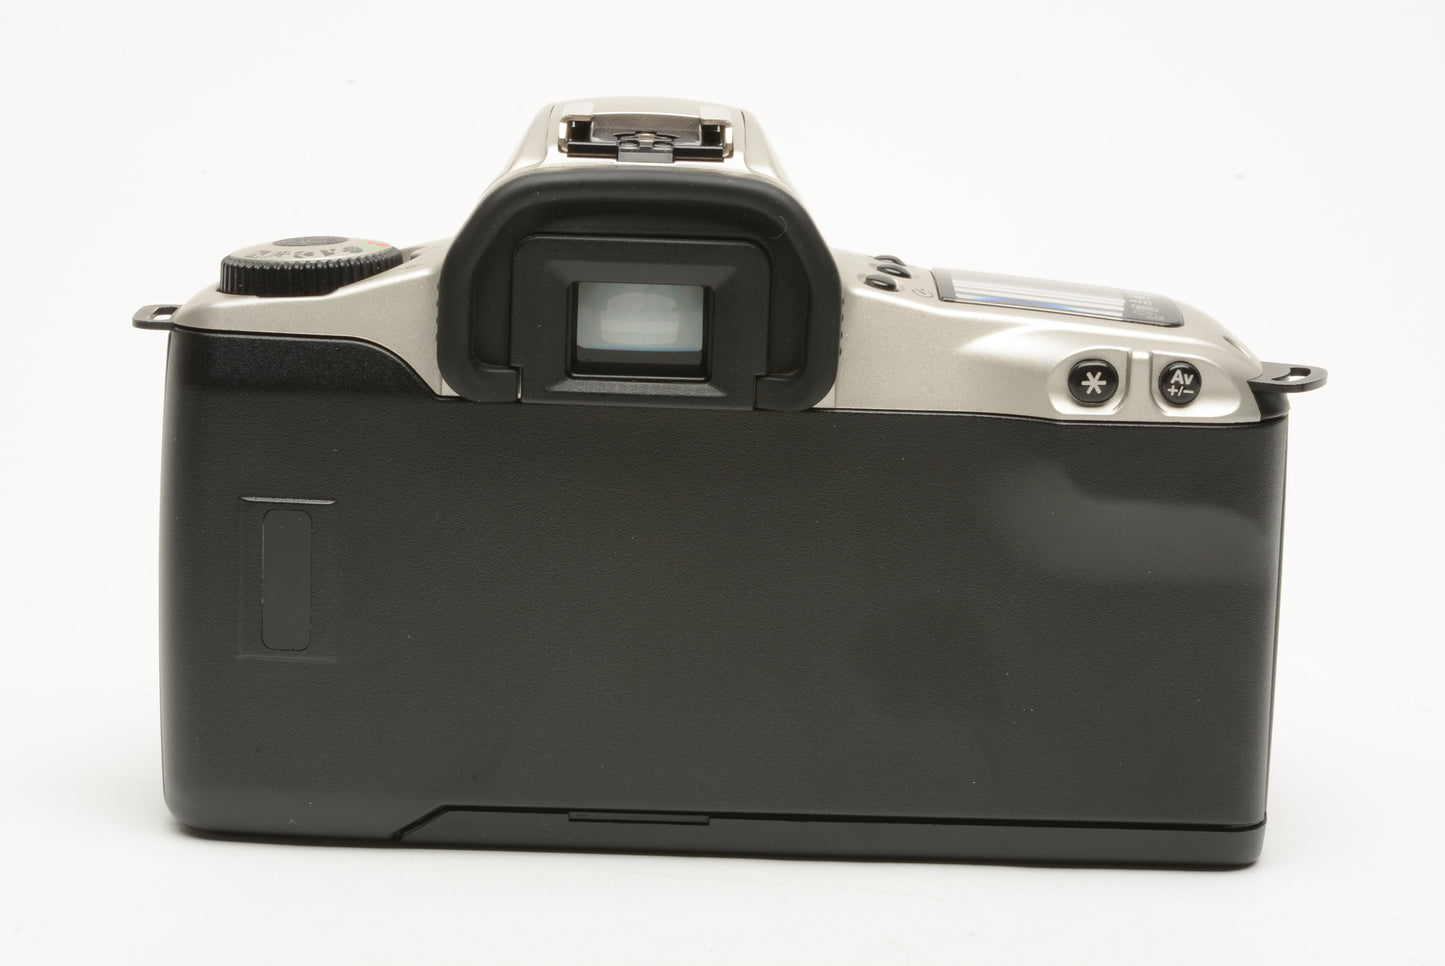 Canon Rebel 2000 35mm SLR w/EF 28-80mm f/3.5-5.6 Lens, Manual, Strap, UV